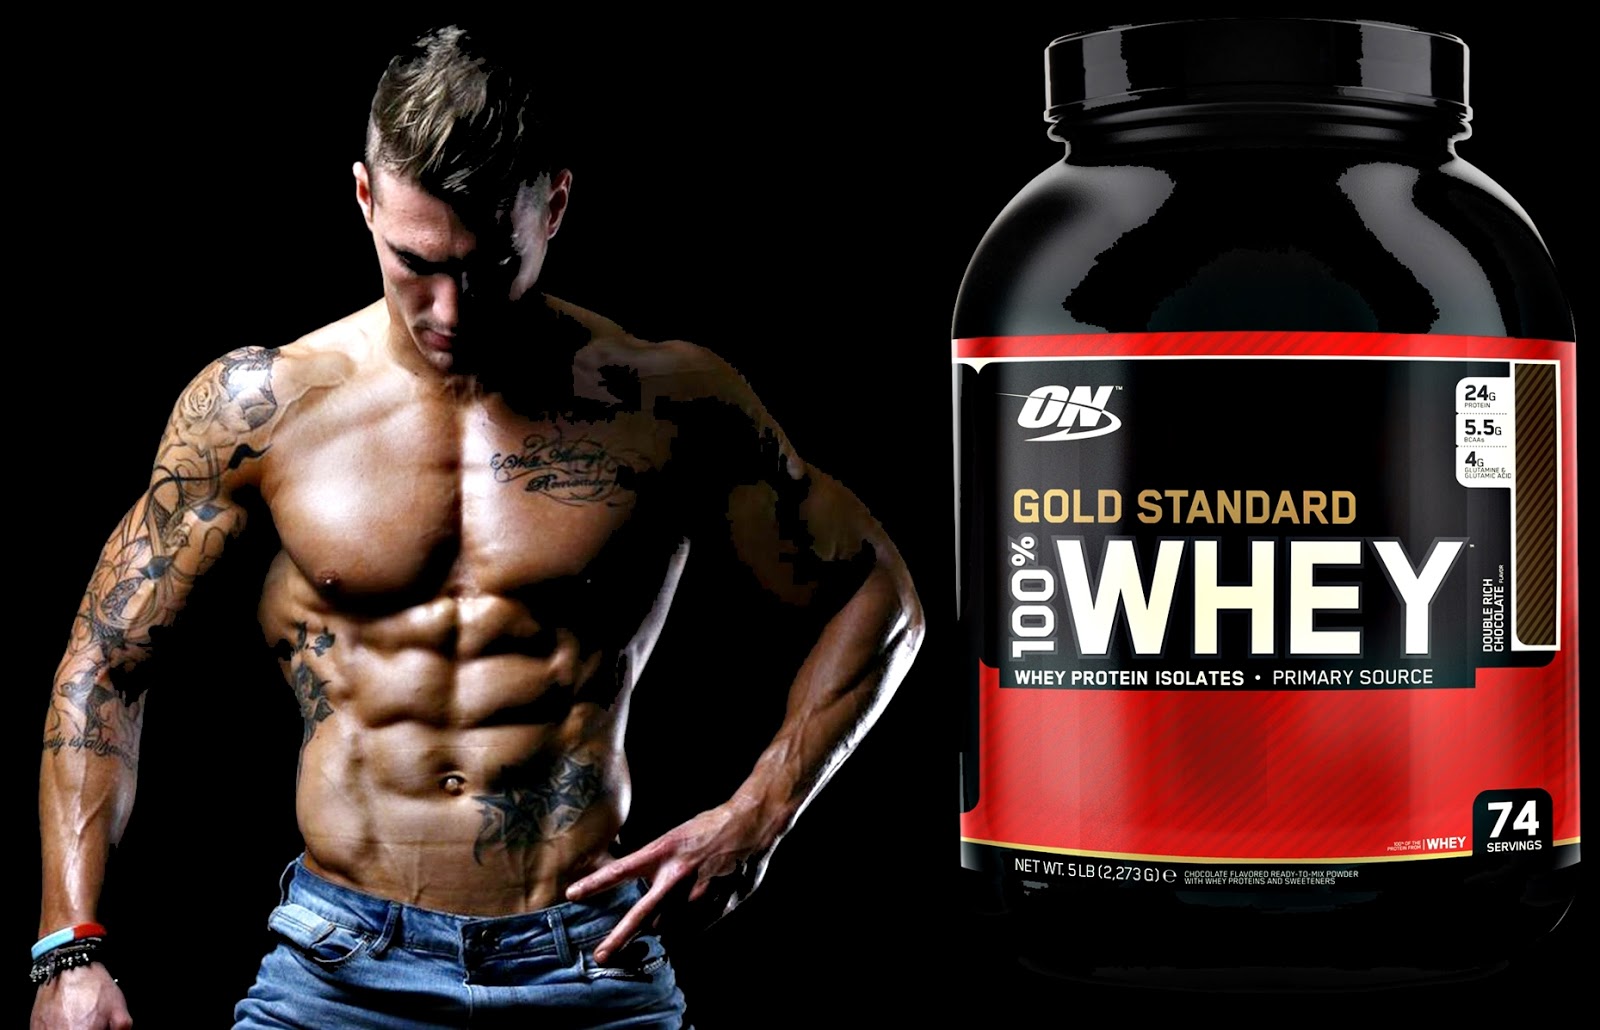 Goku протеин. Спортпит Whey Protein. Протеин Whey Gold Standard Optimum Nutrition. Secret Nutrition протеин Whey. Реклама спортивного питания.